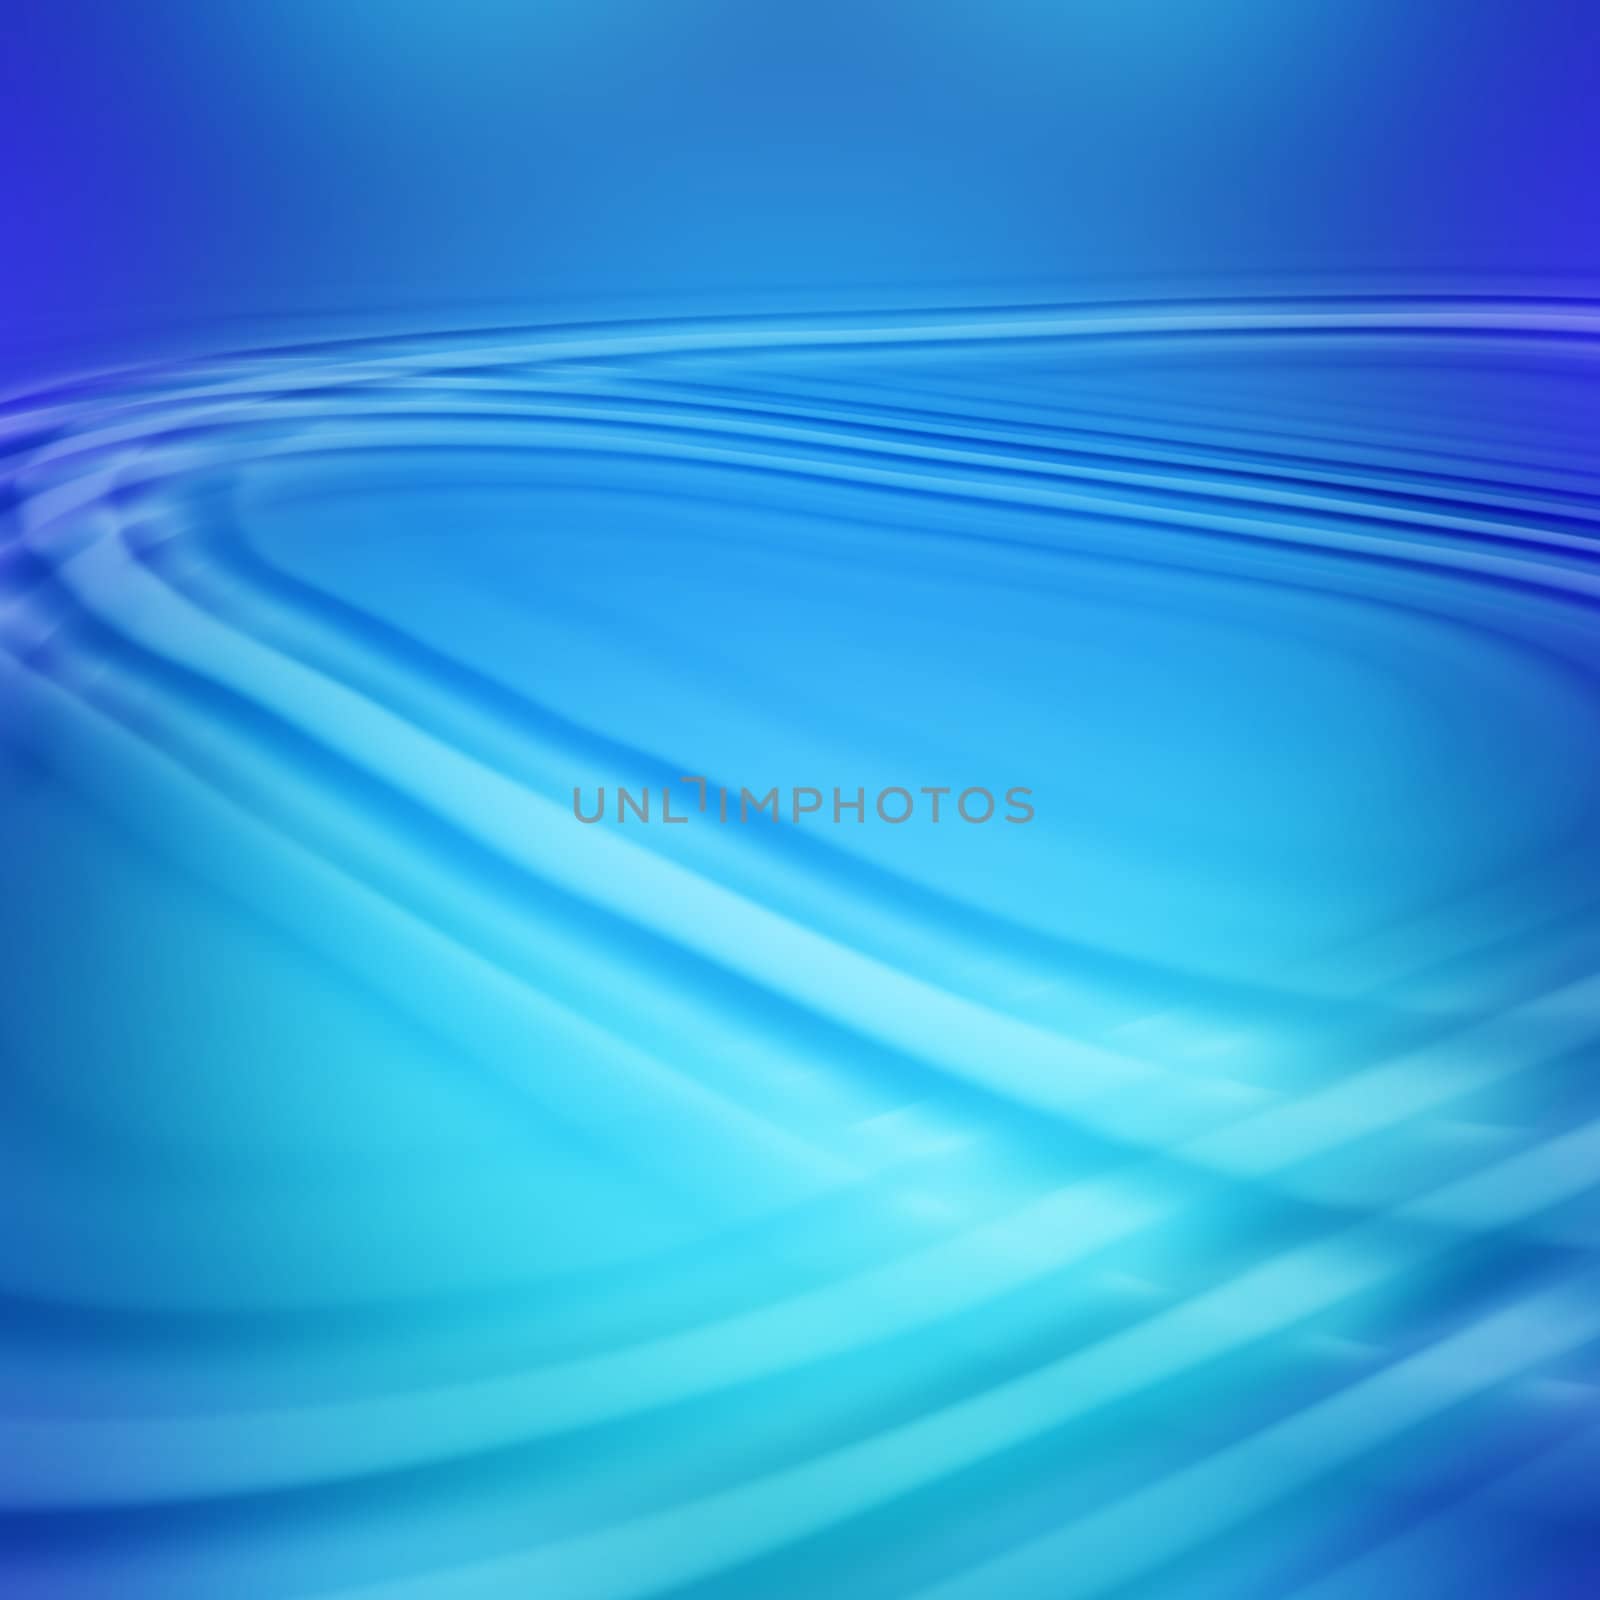 elegant diagonal blue ripples or waves background

